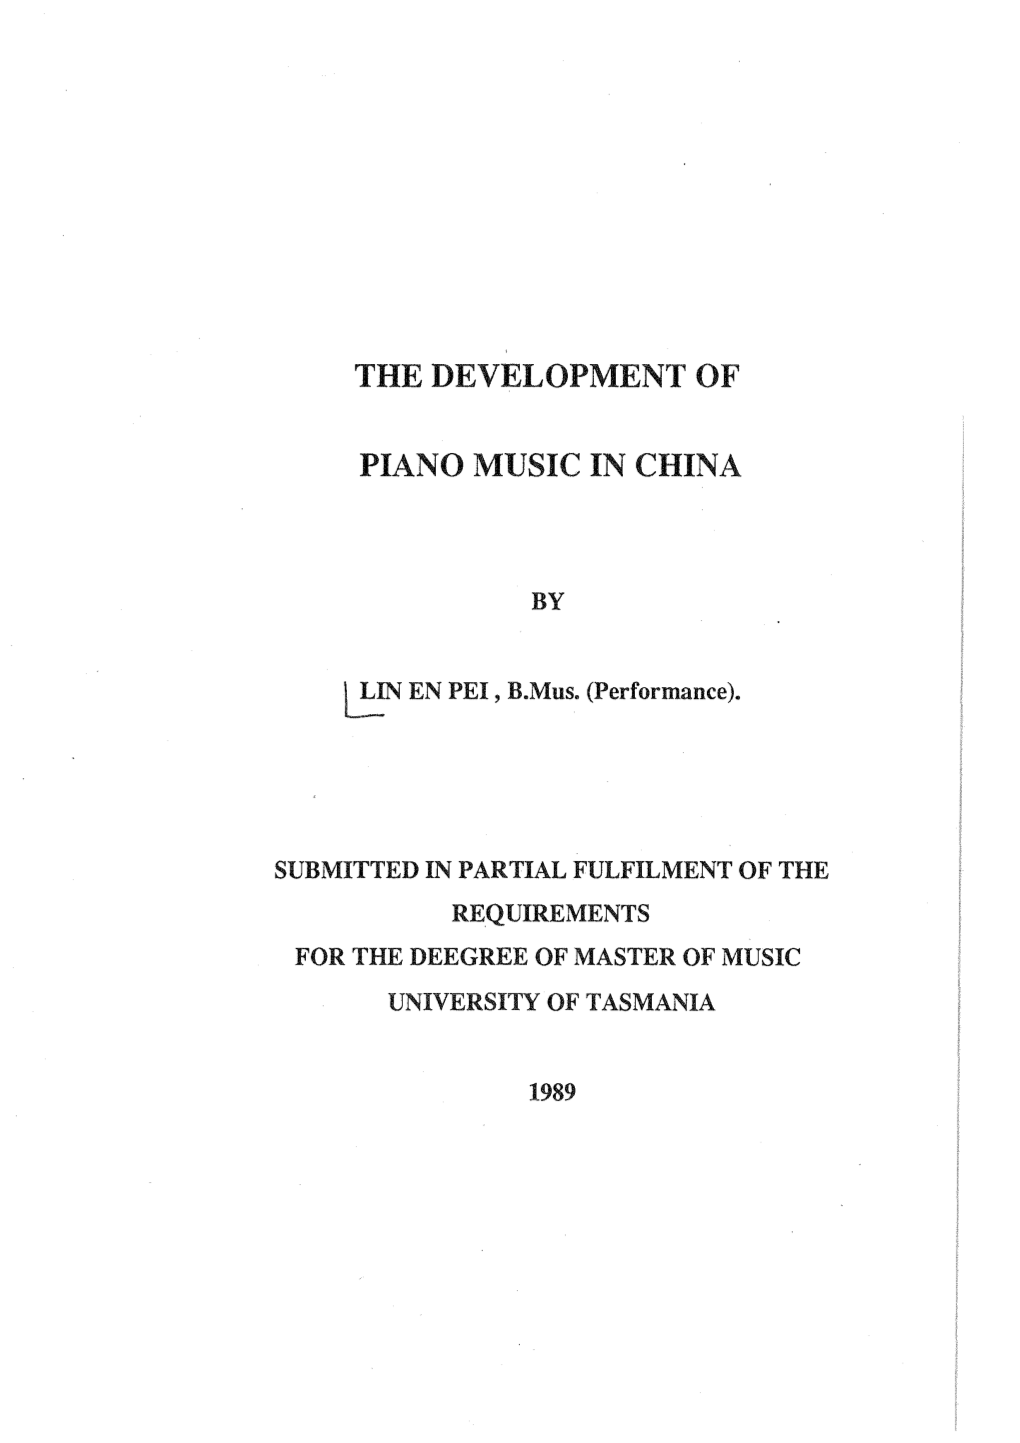 The Development of Piano Music in China